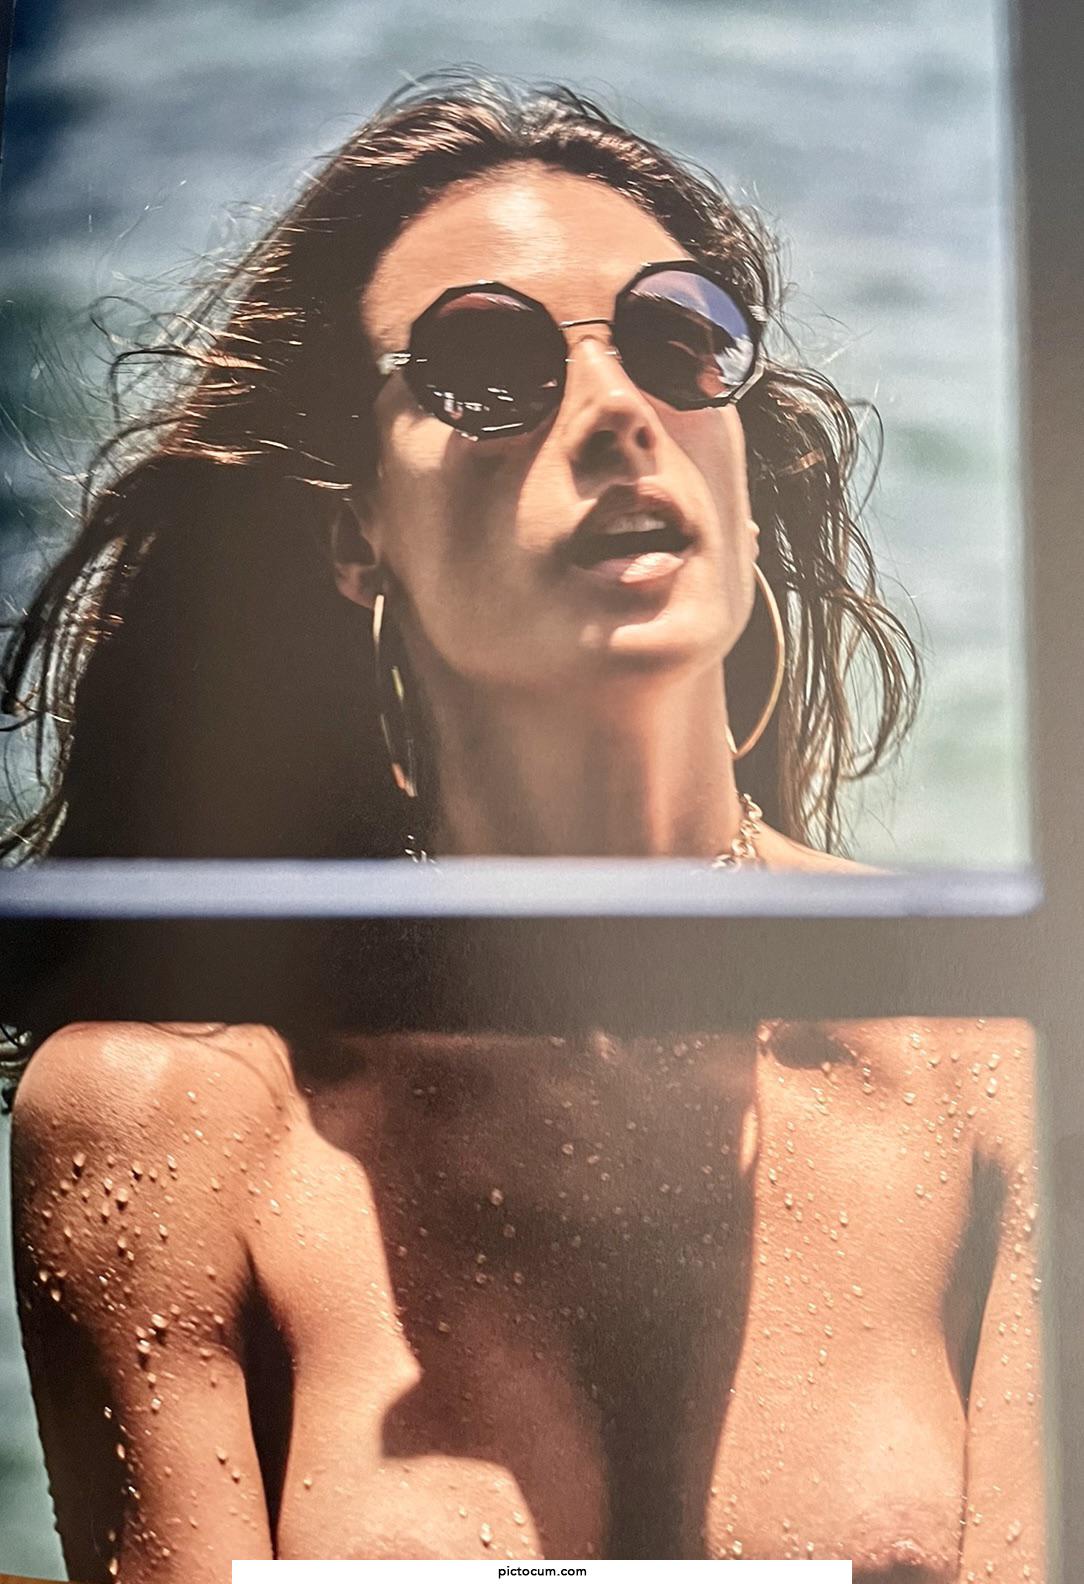 Alessandra Ambrosio wearing sunglasses